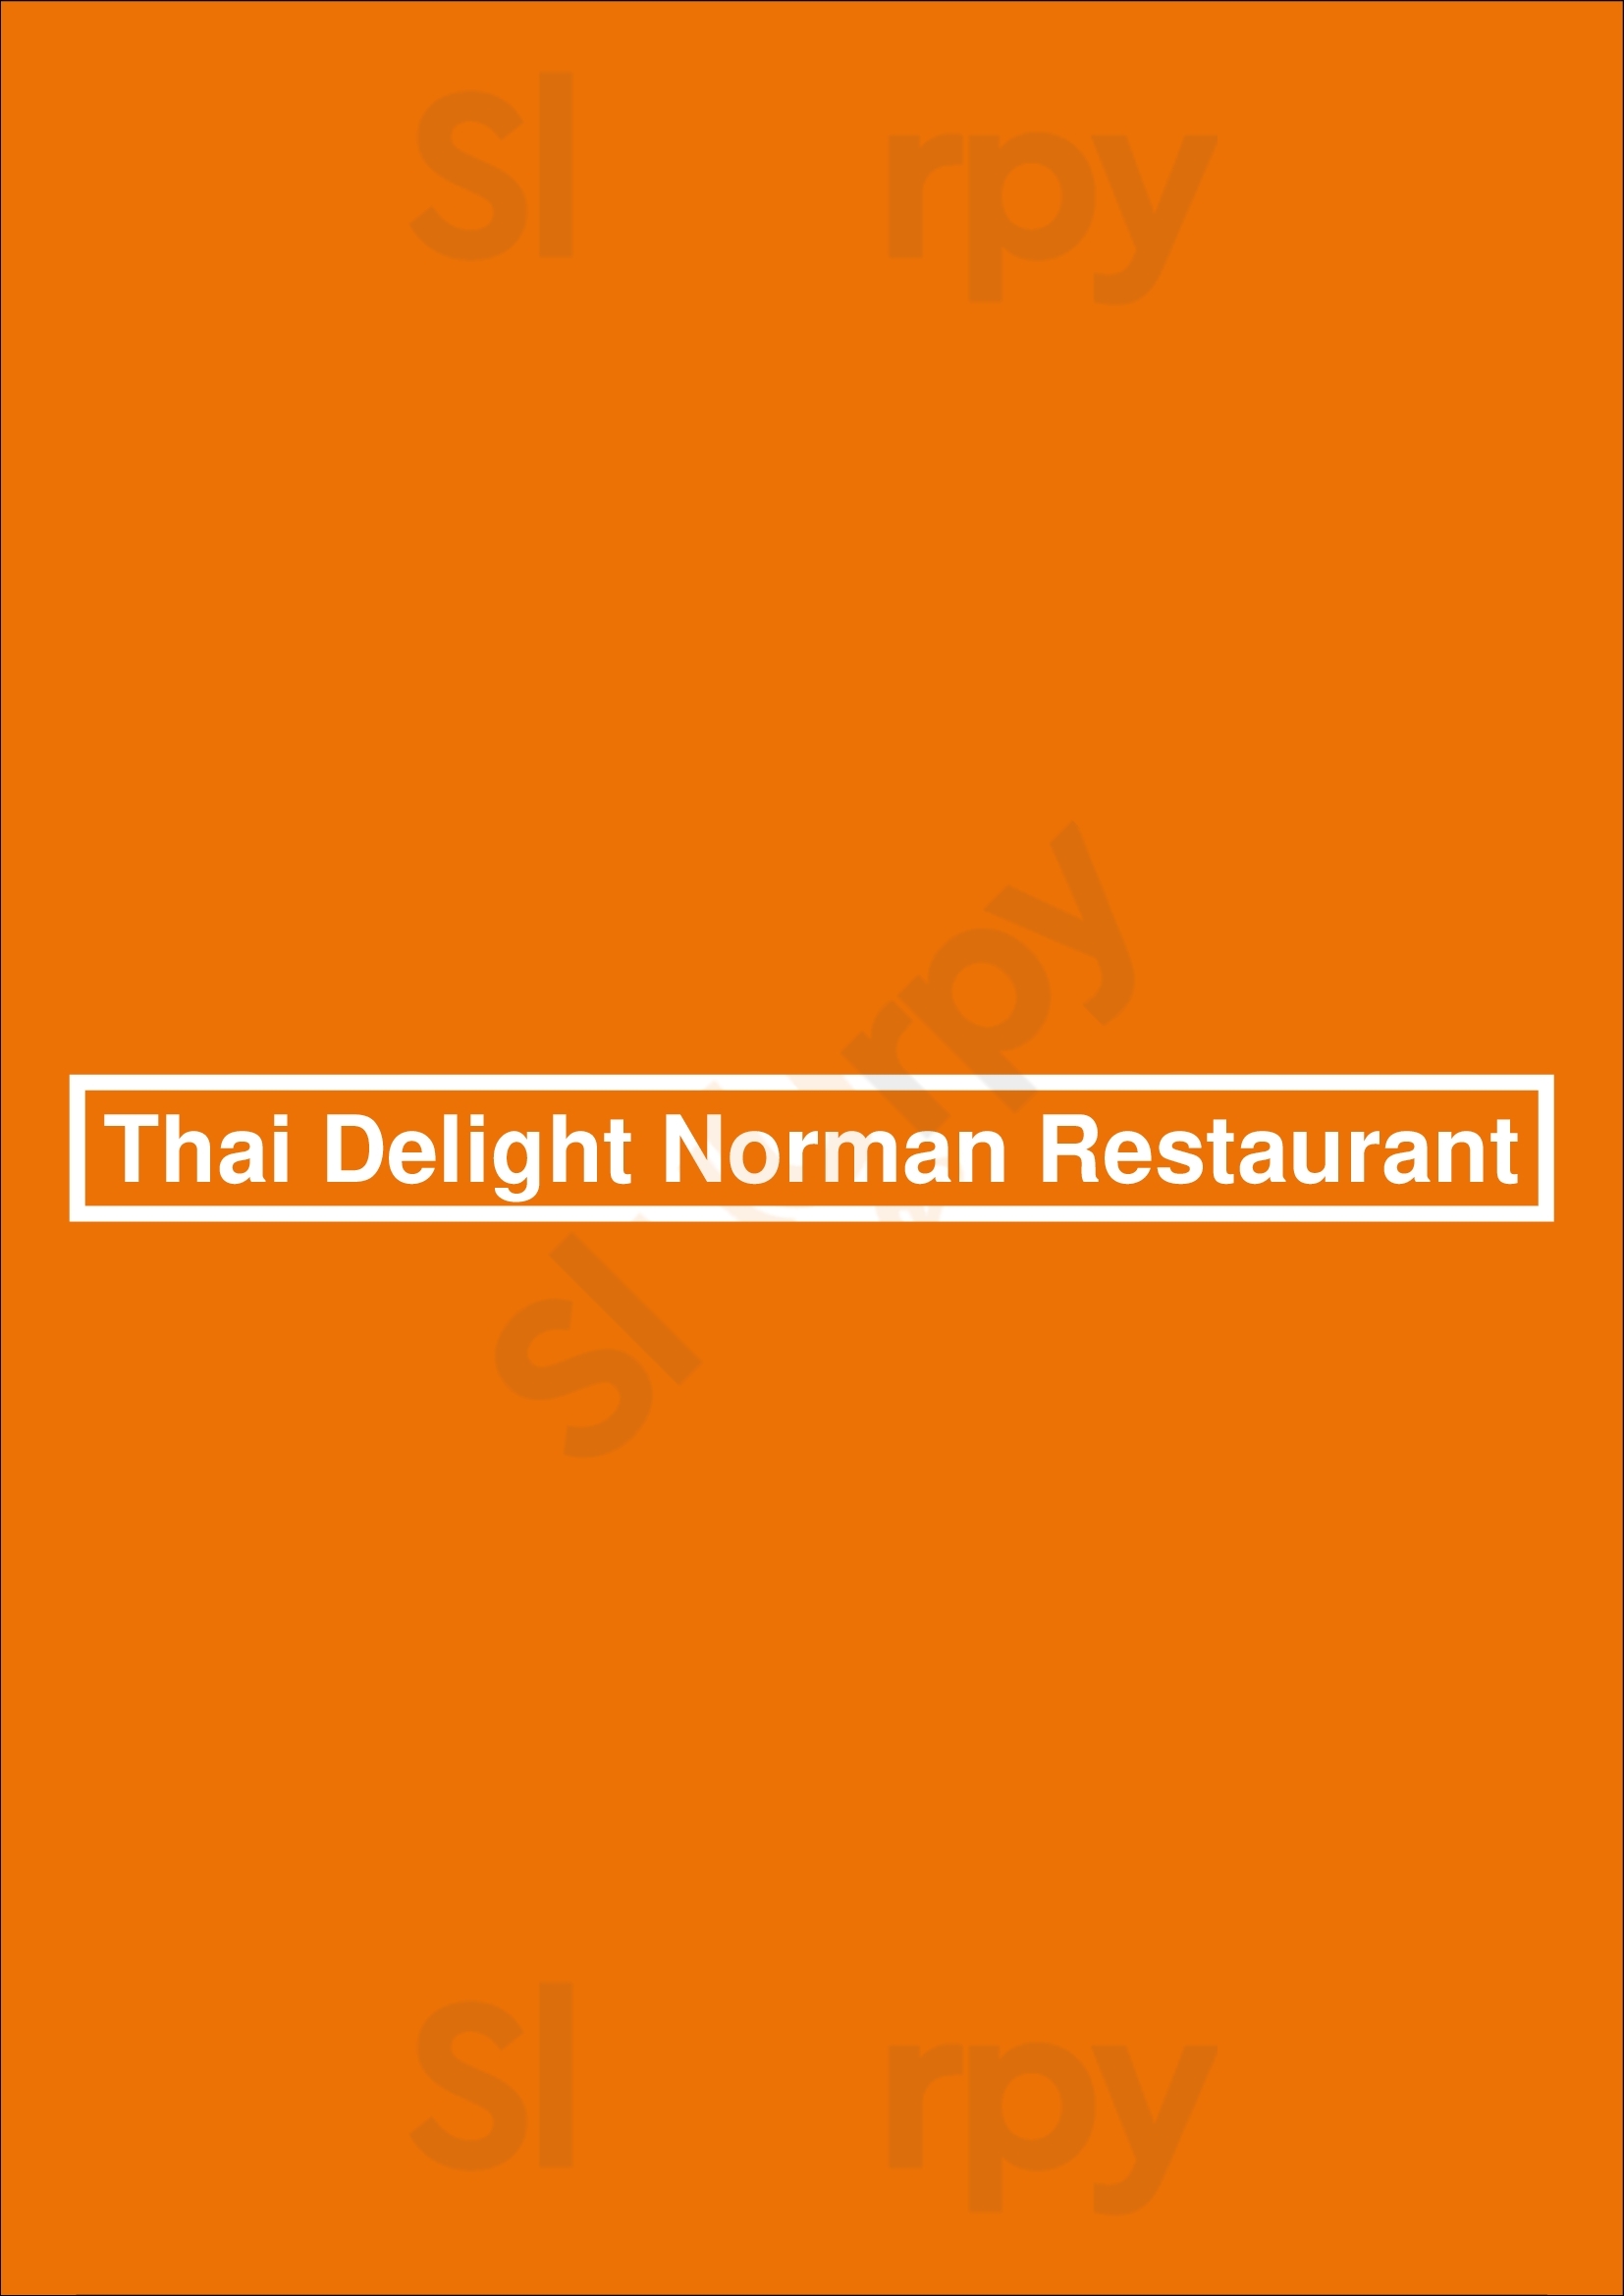 Thai Delight Norman Restaurant Norman Menu - 1